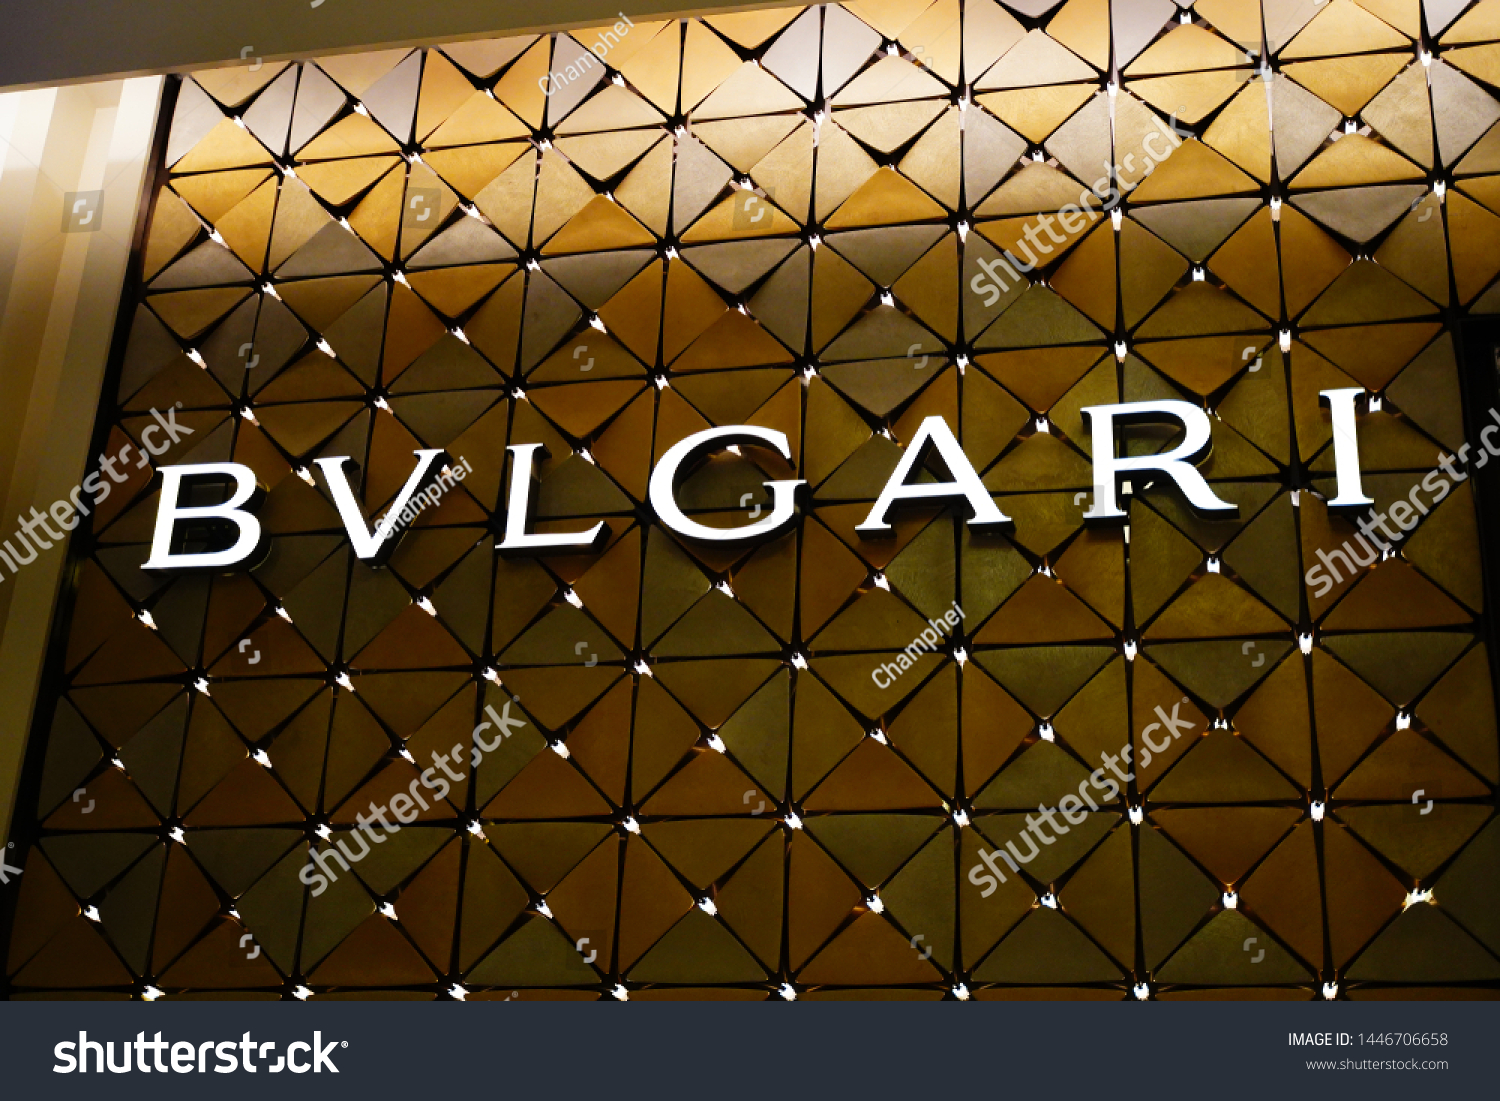 bvlgari clothes brand